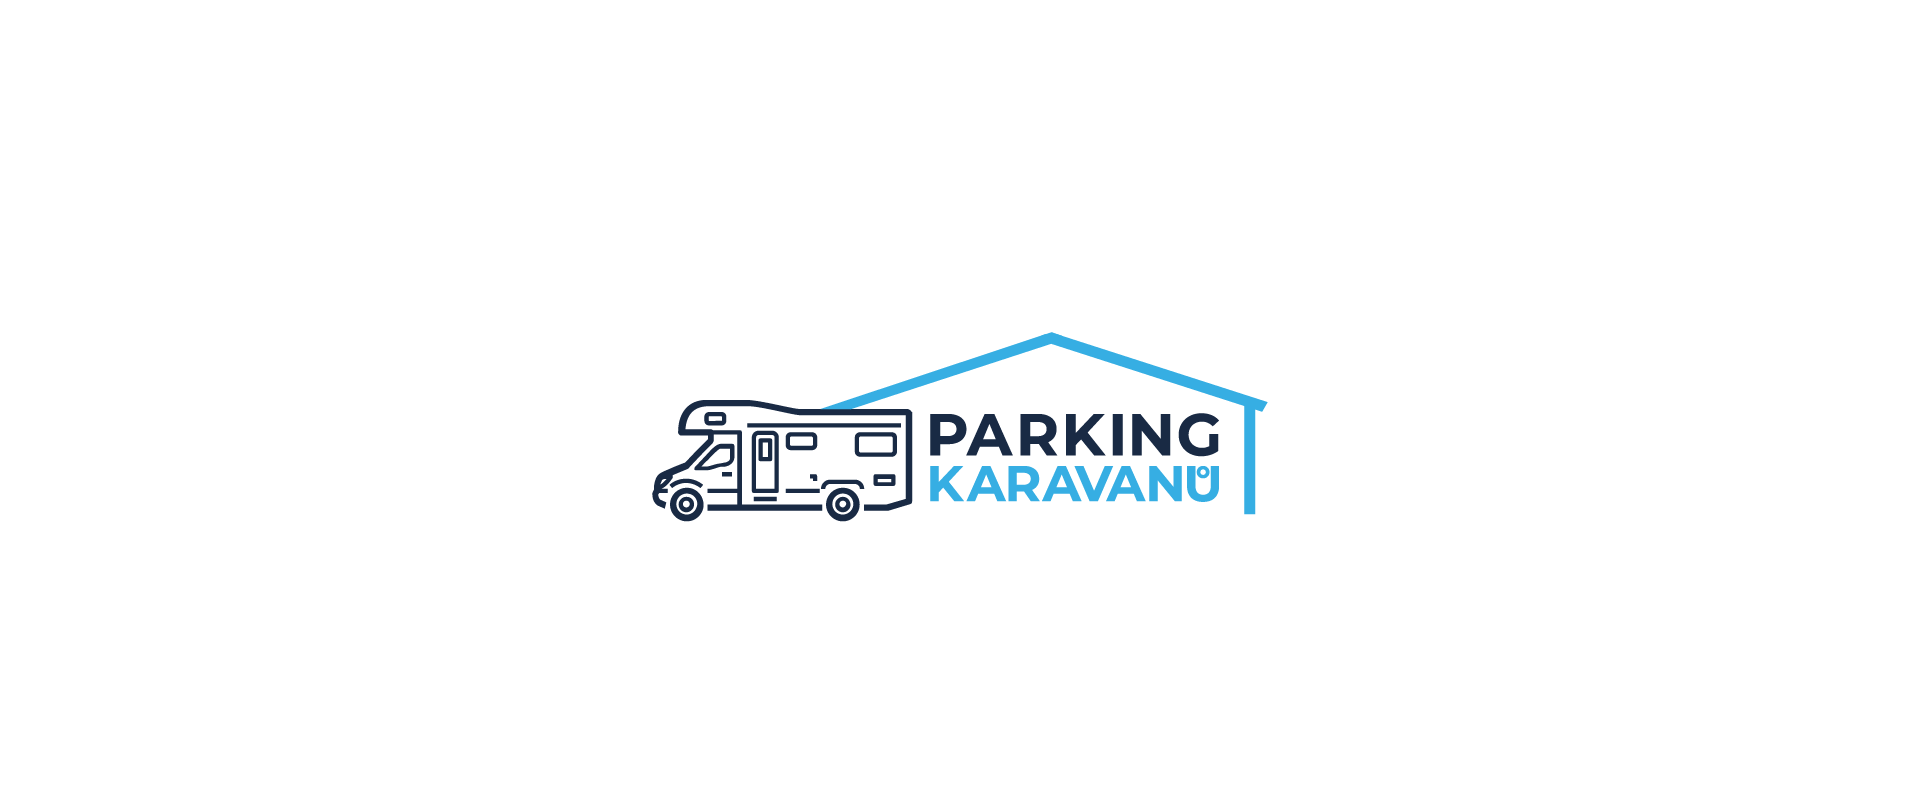 parking karavanů